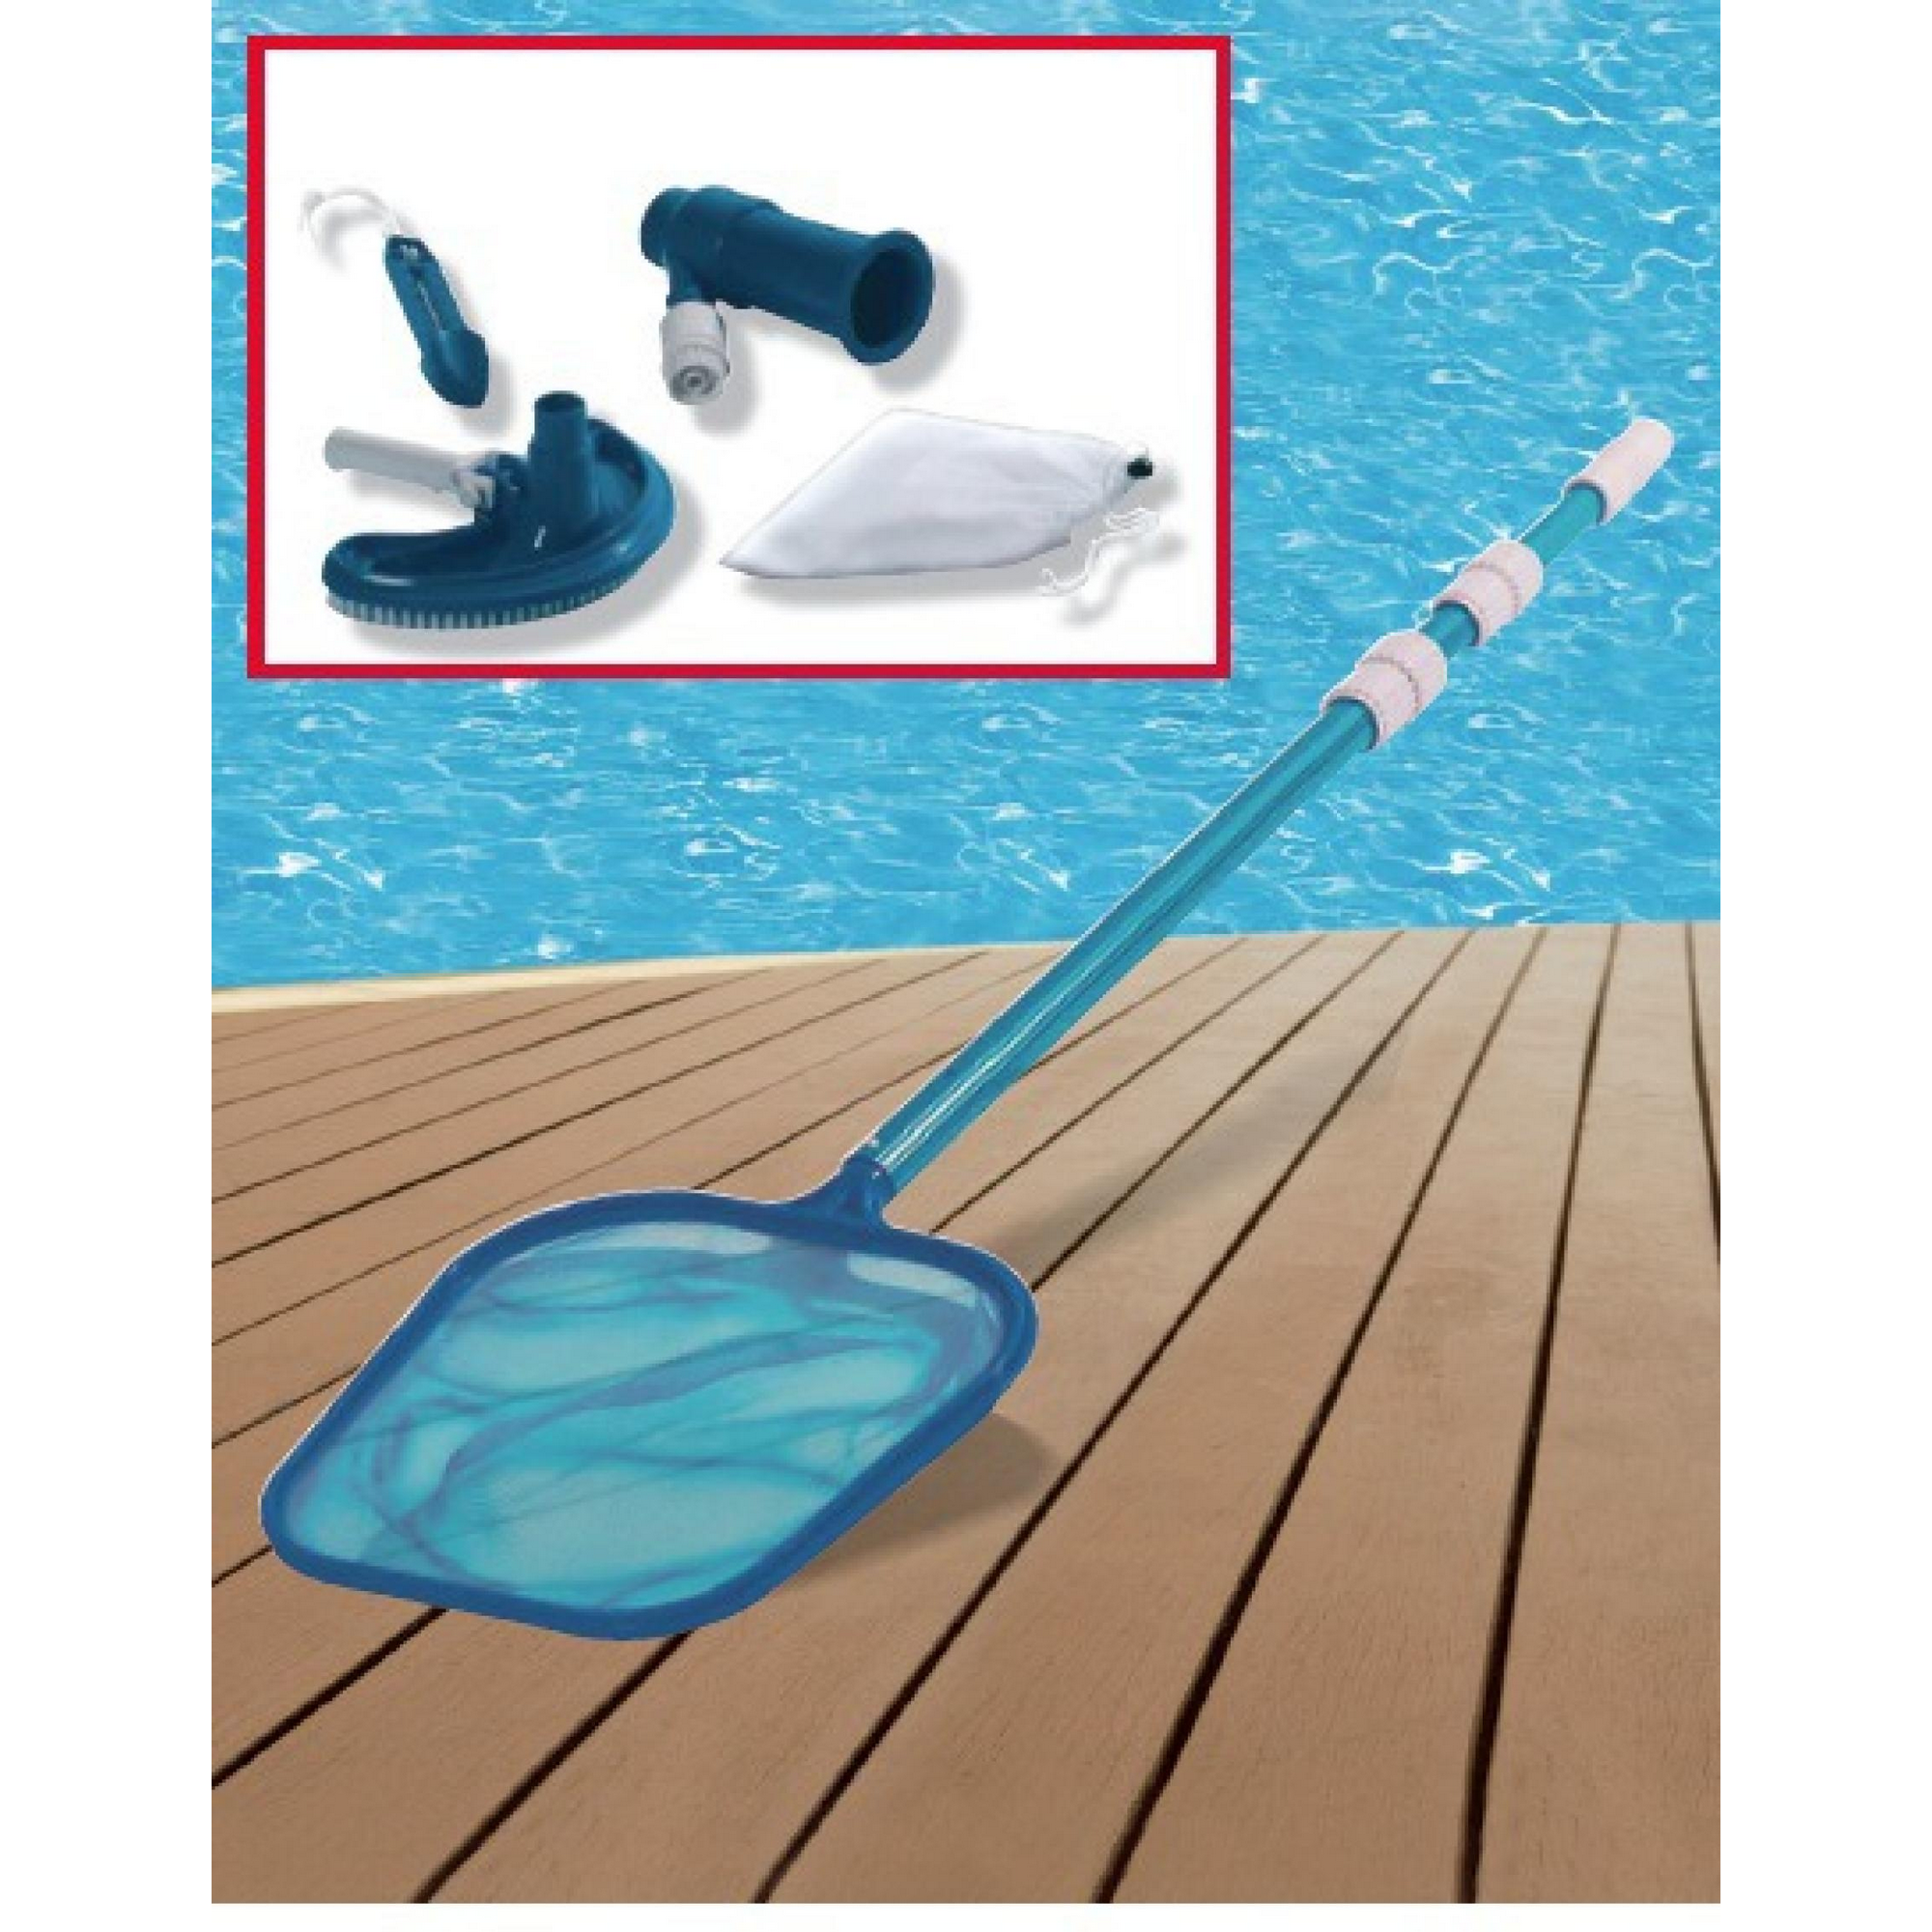 Pflege-Set für Pools mit Sandfilteranlage, 4-teilig + product picture